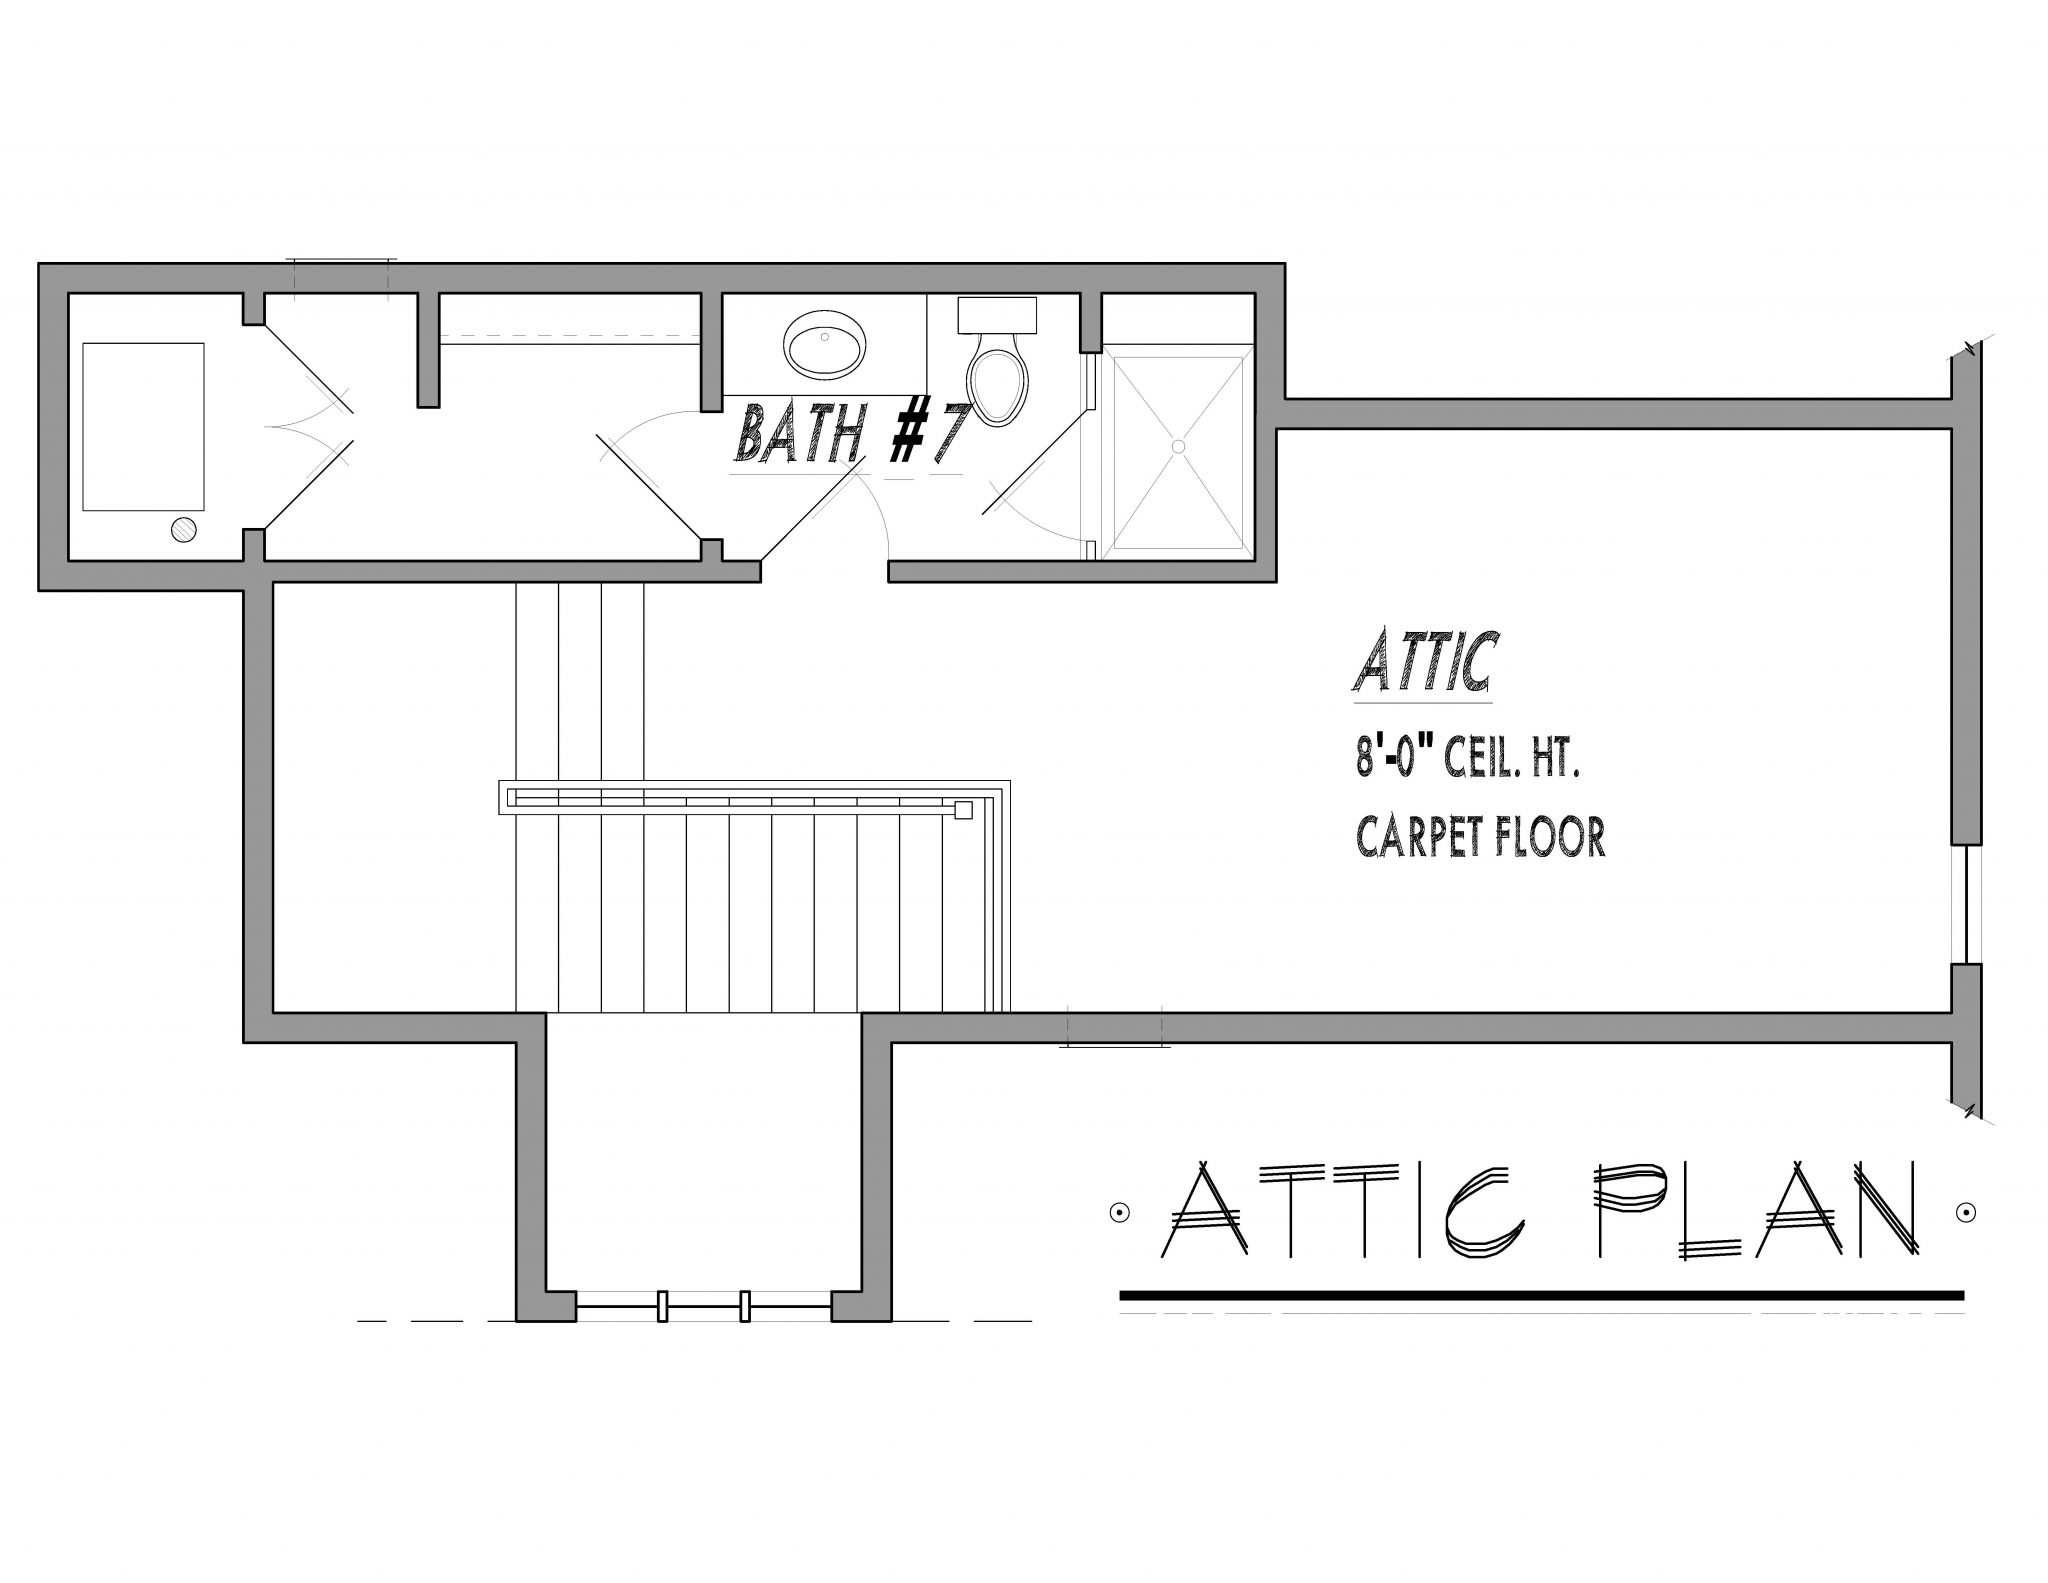 Michael-Buss-Architects-15019 Plan